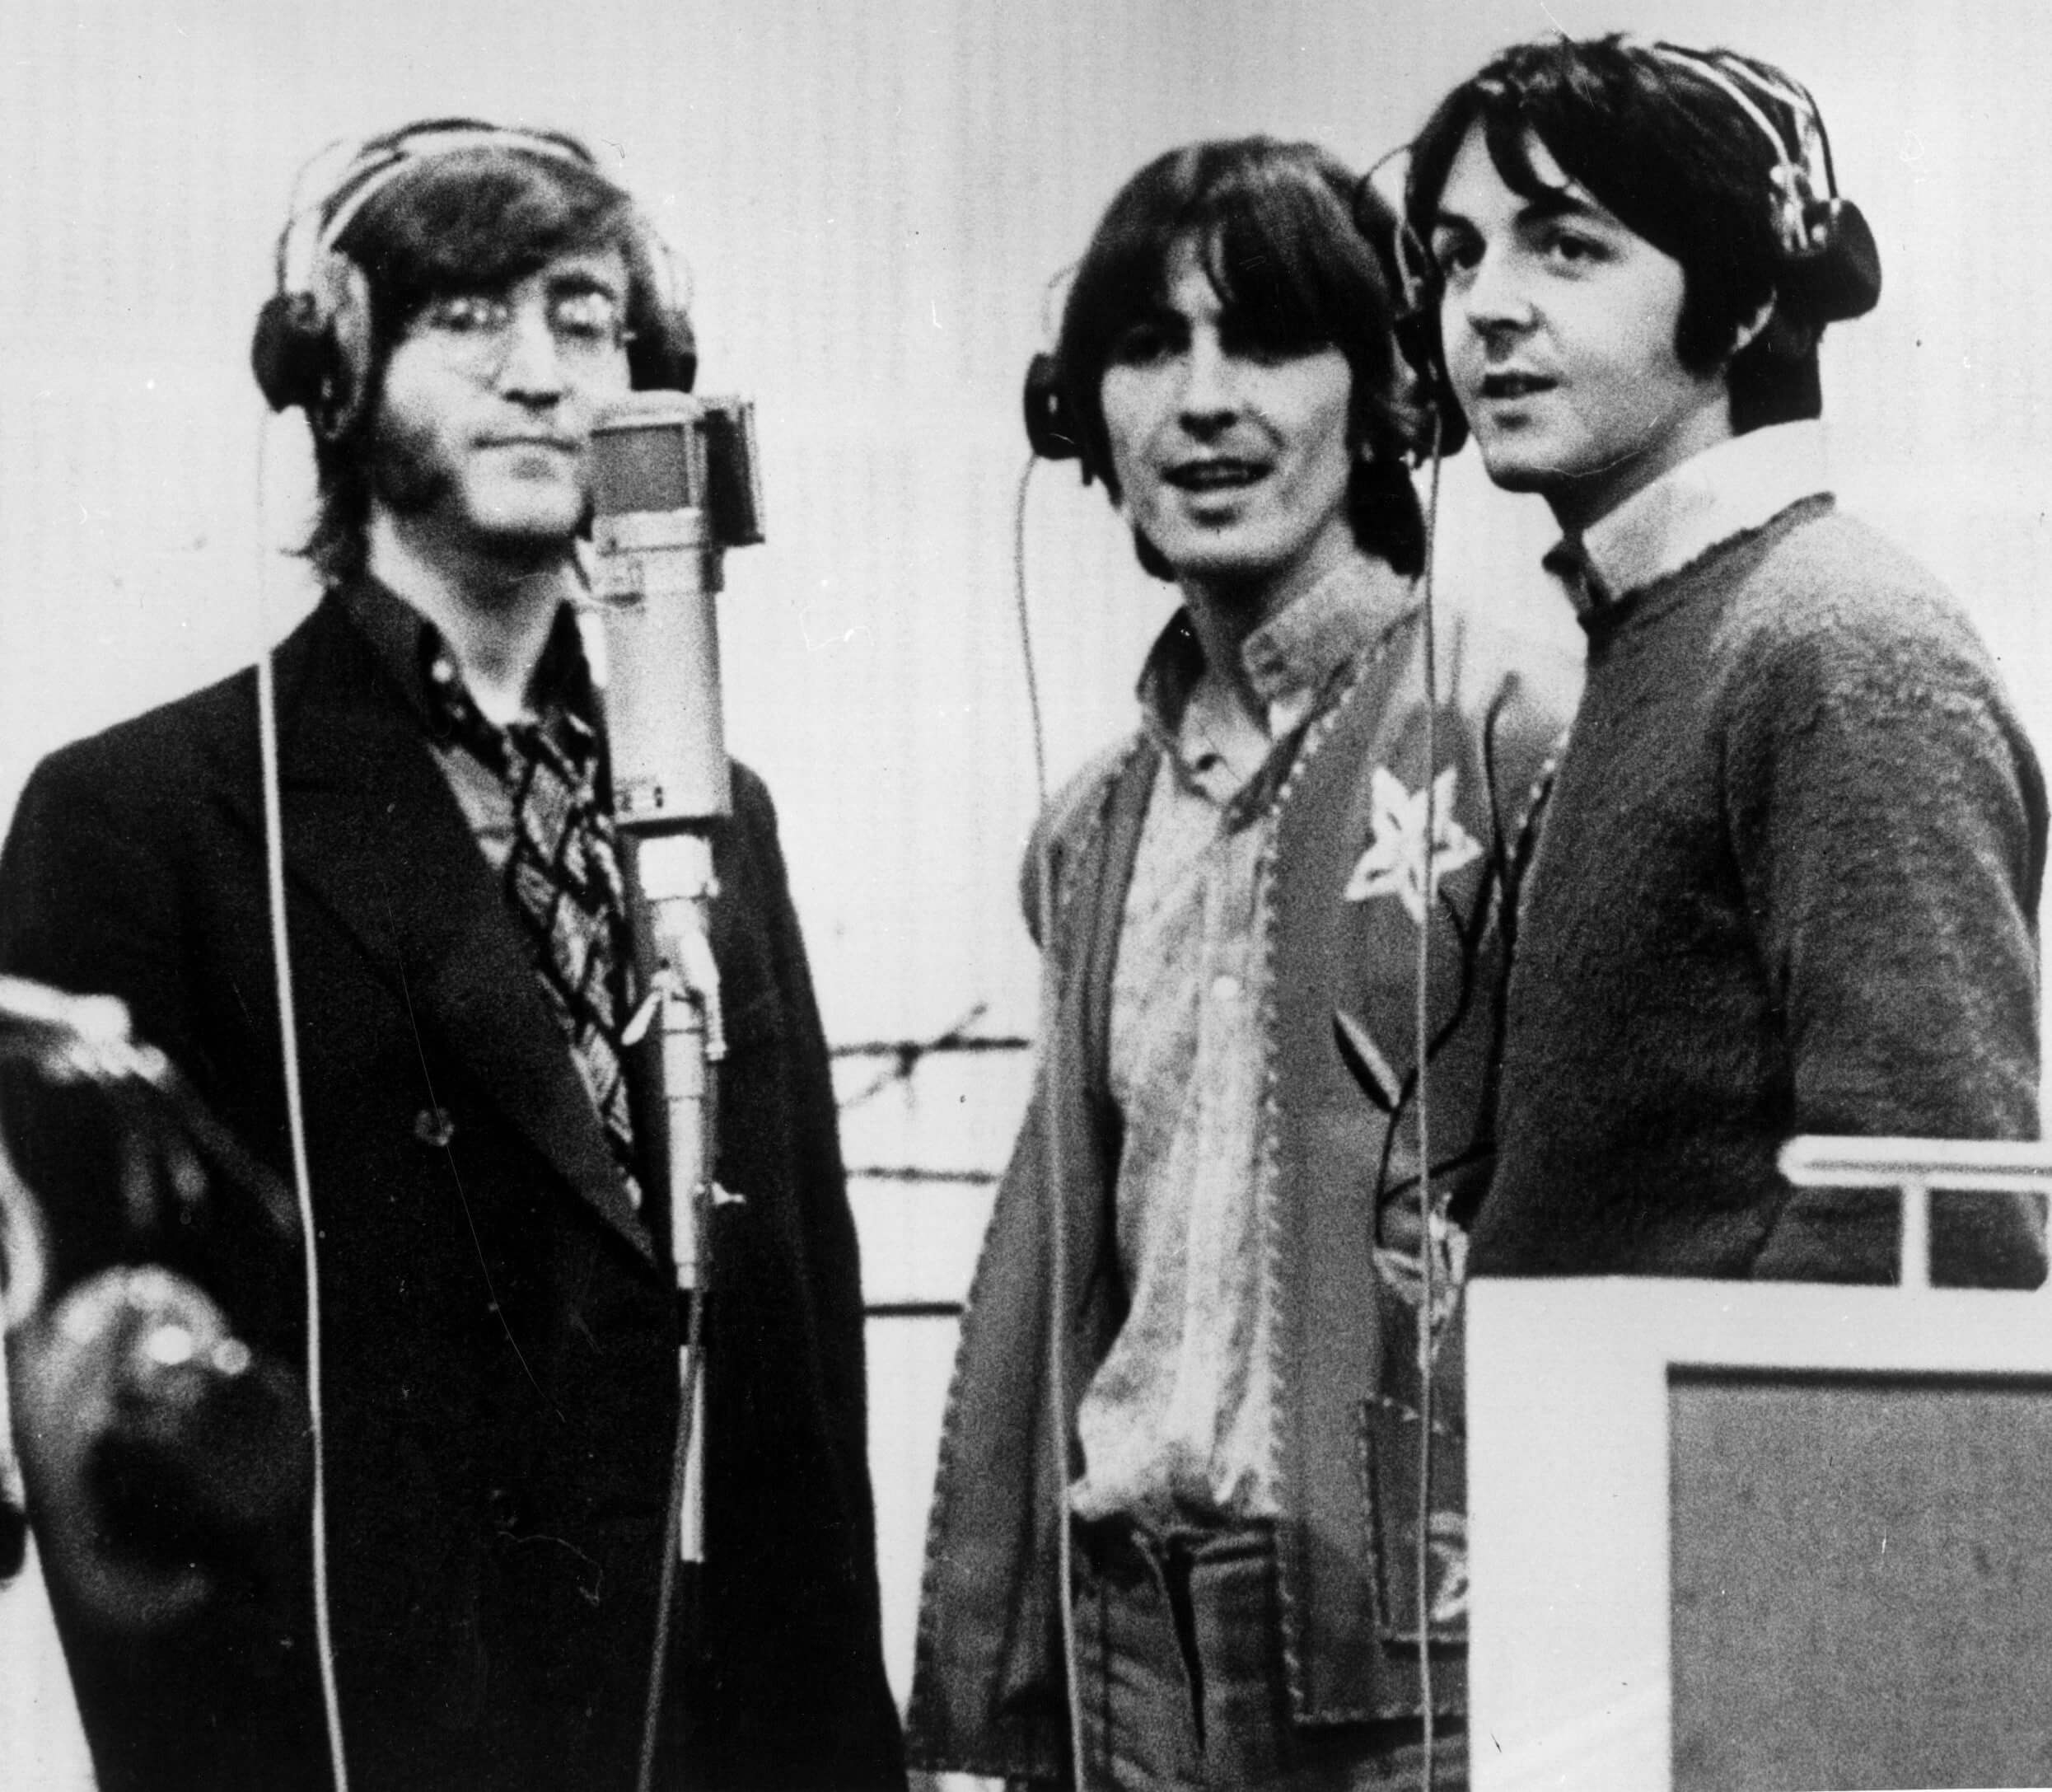 John Lennon, George Harrison, and Paul McCartney during The Beatles' "Michelle" era